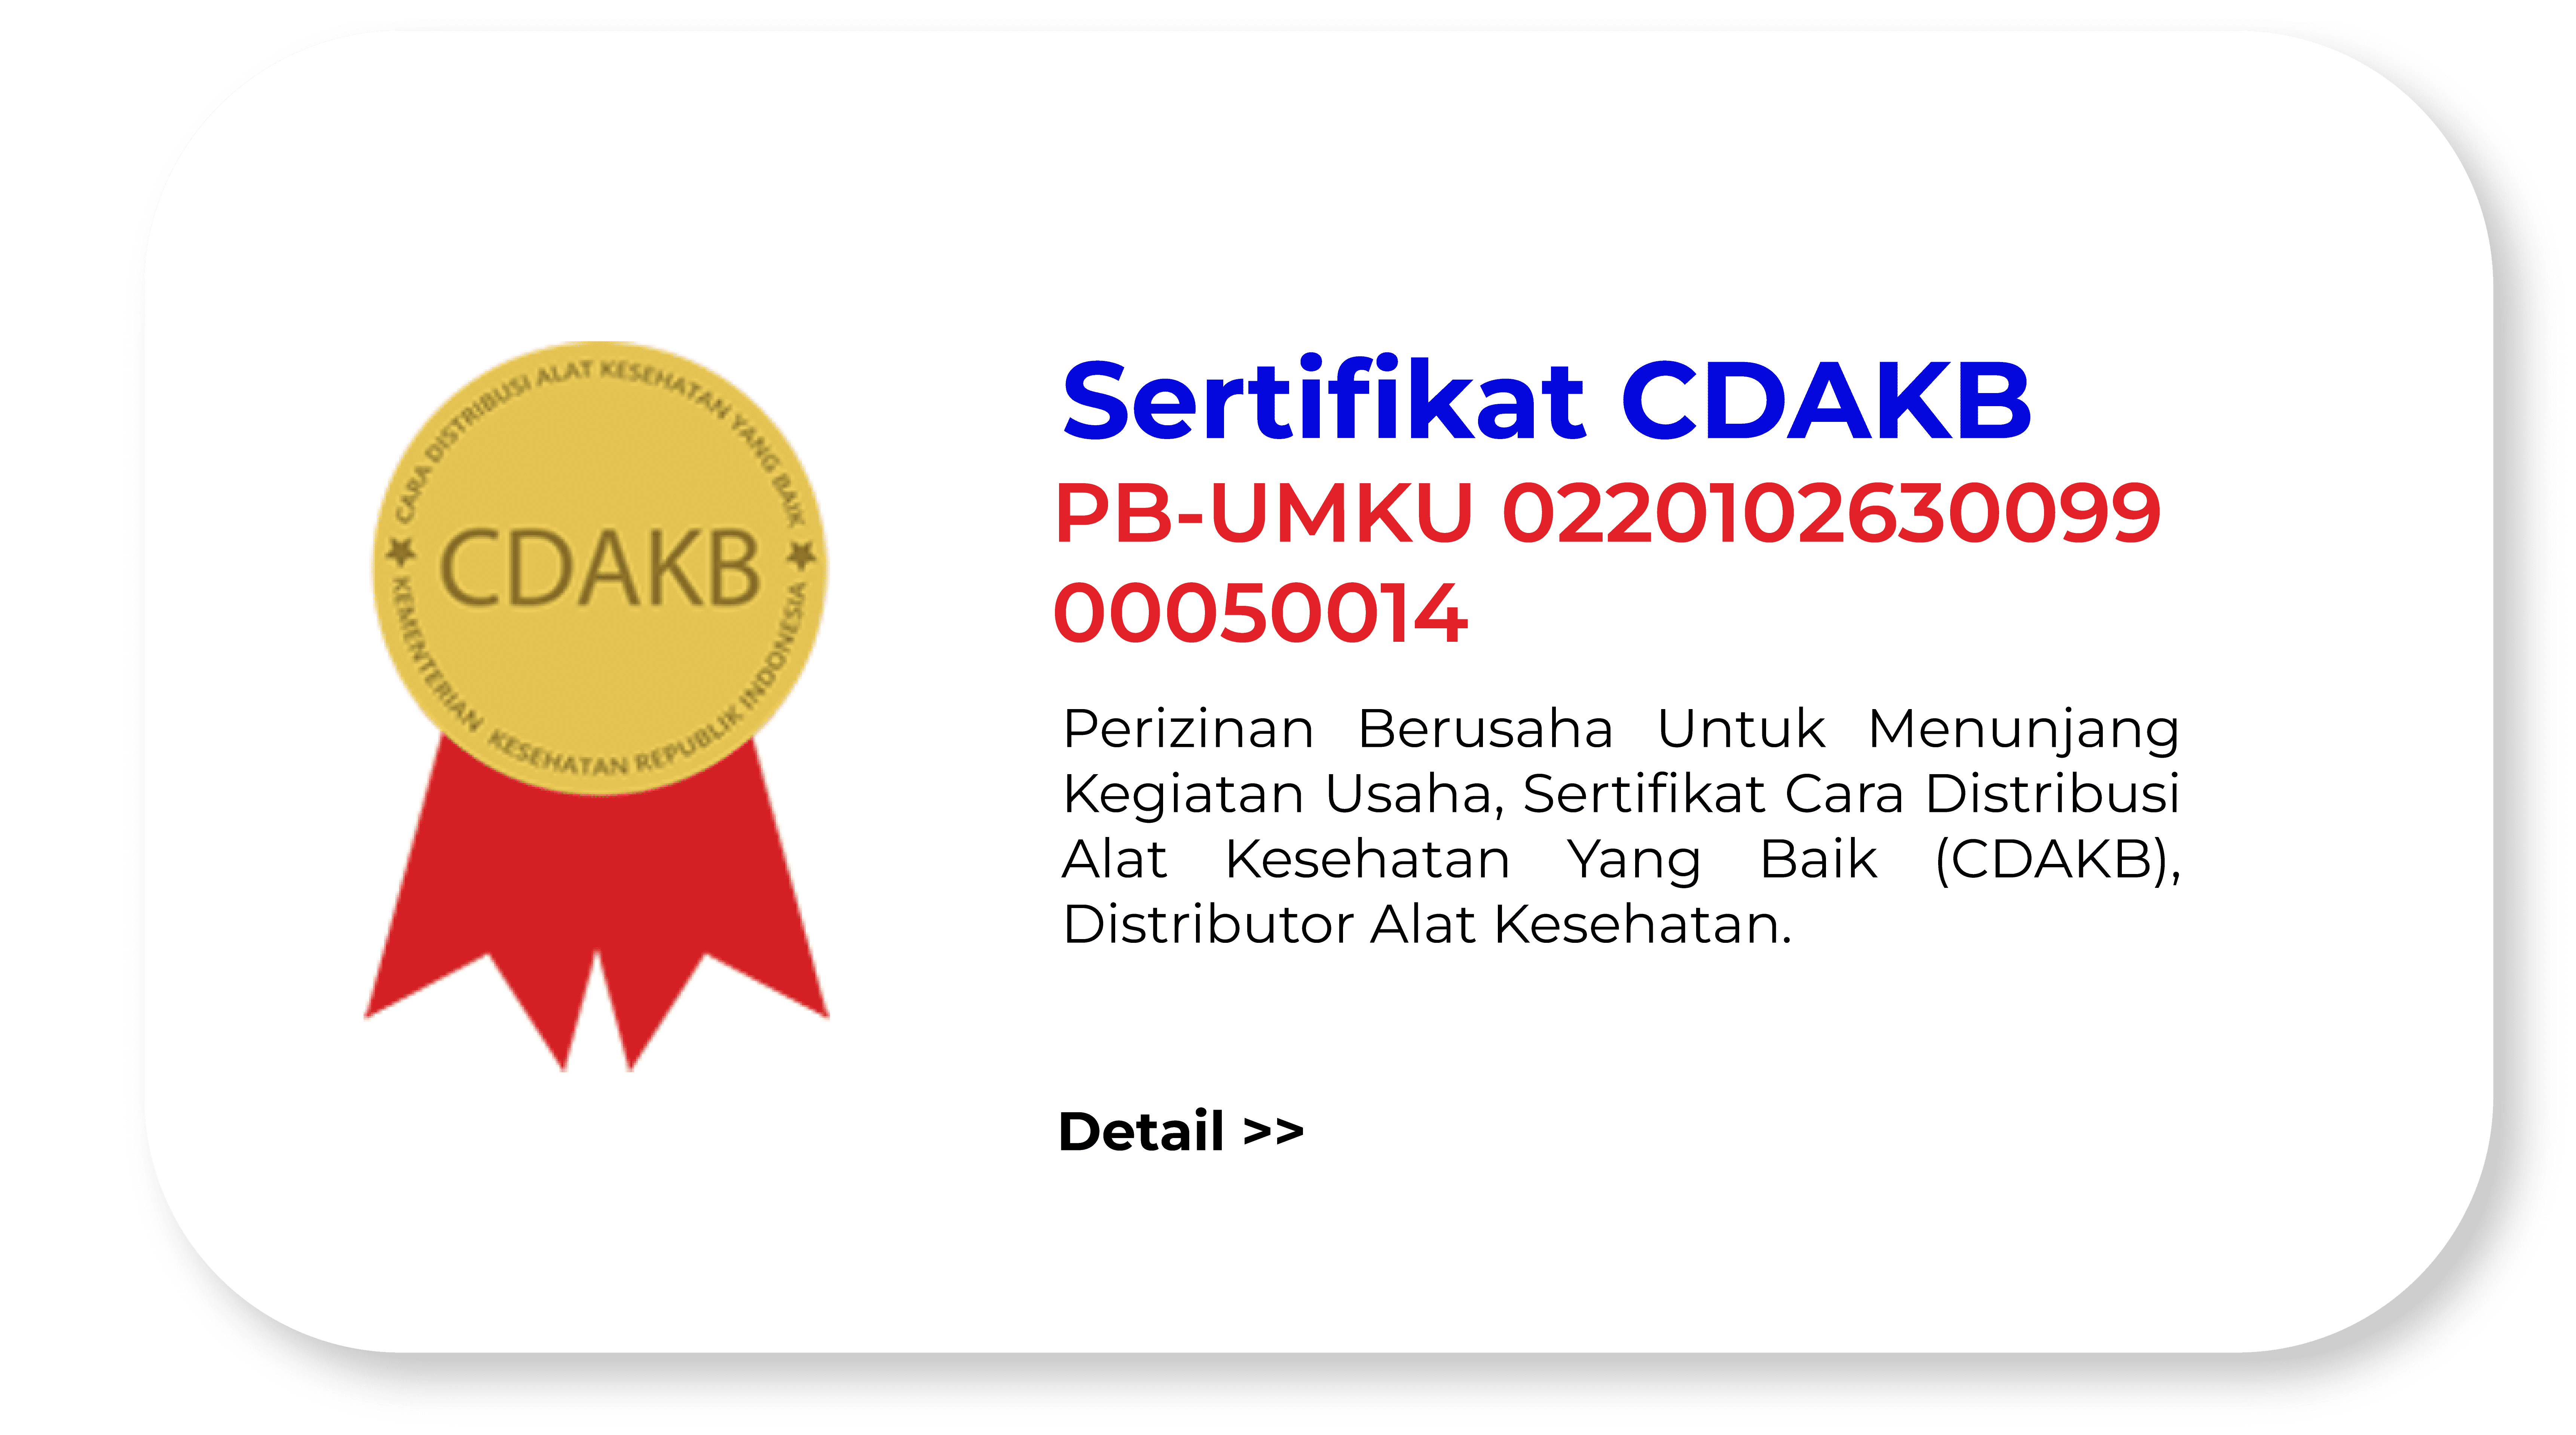 CDAKB Icon (1)